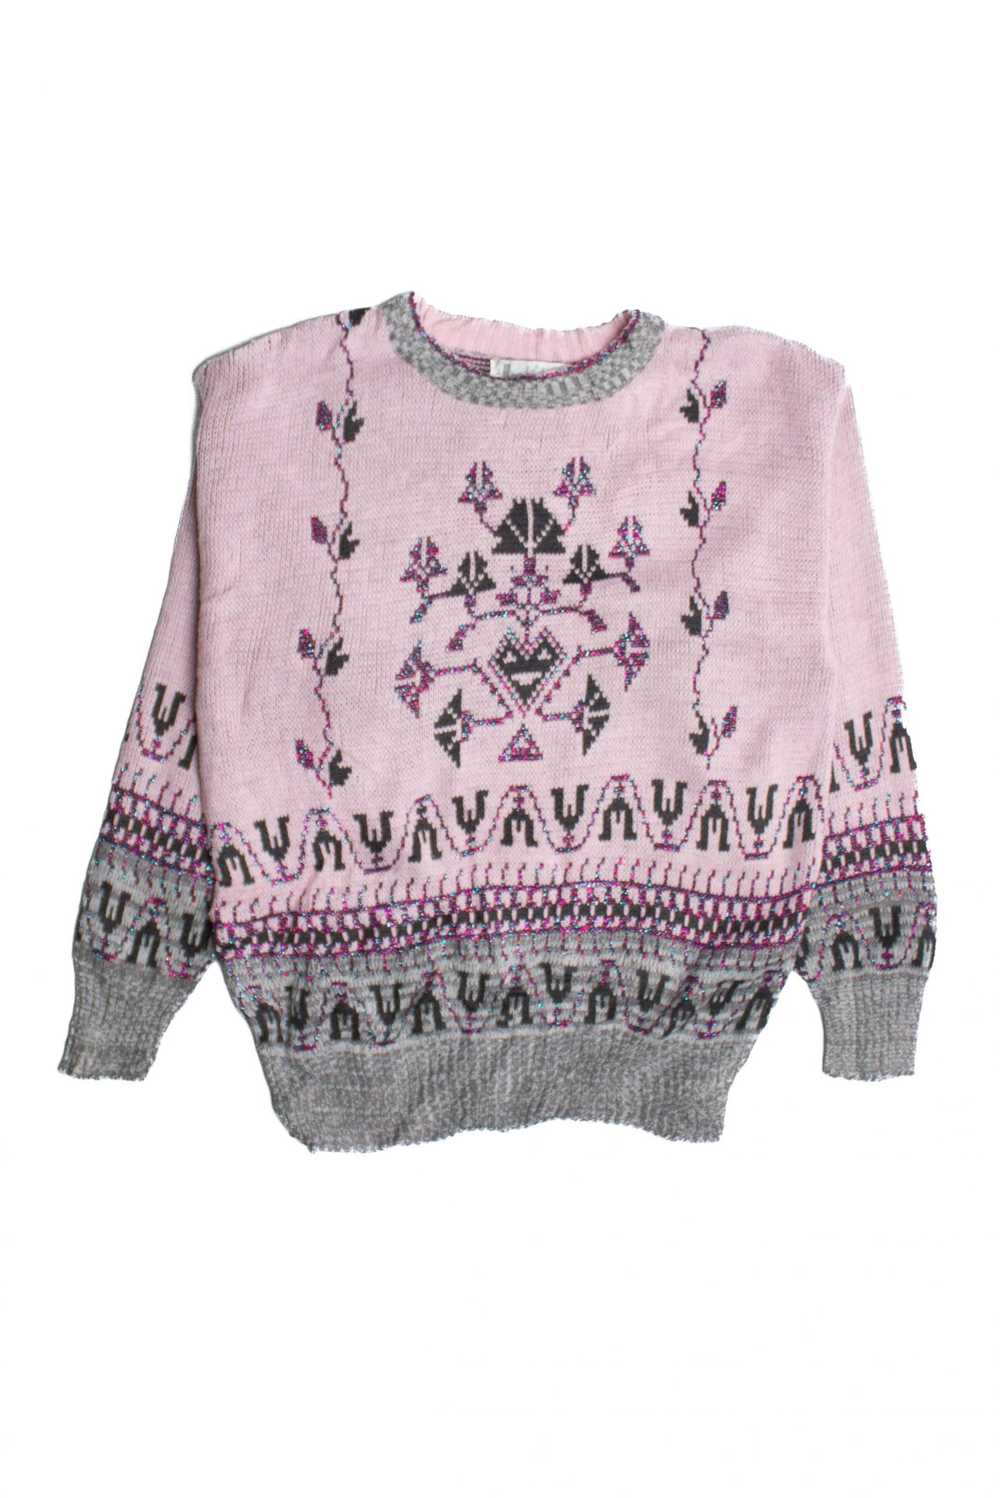 Vintage Barbara Sue Fair Isle Sweater (1980s) - image 2